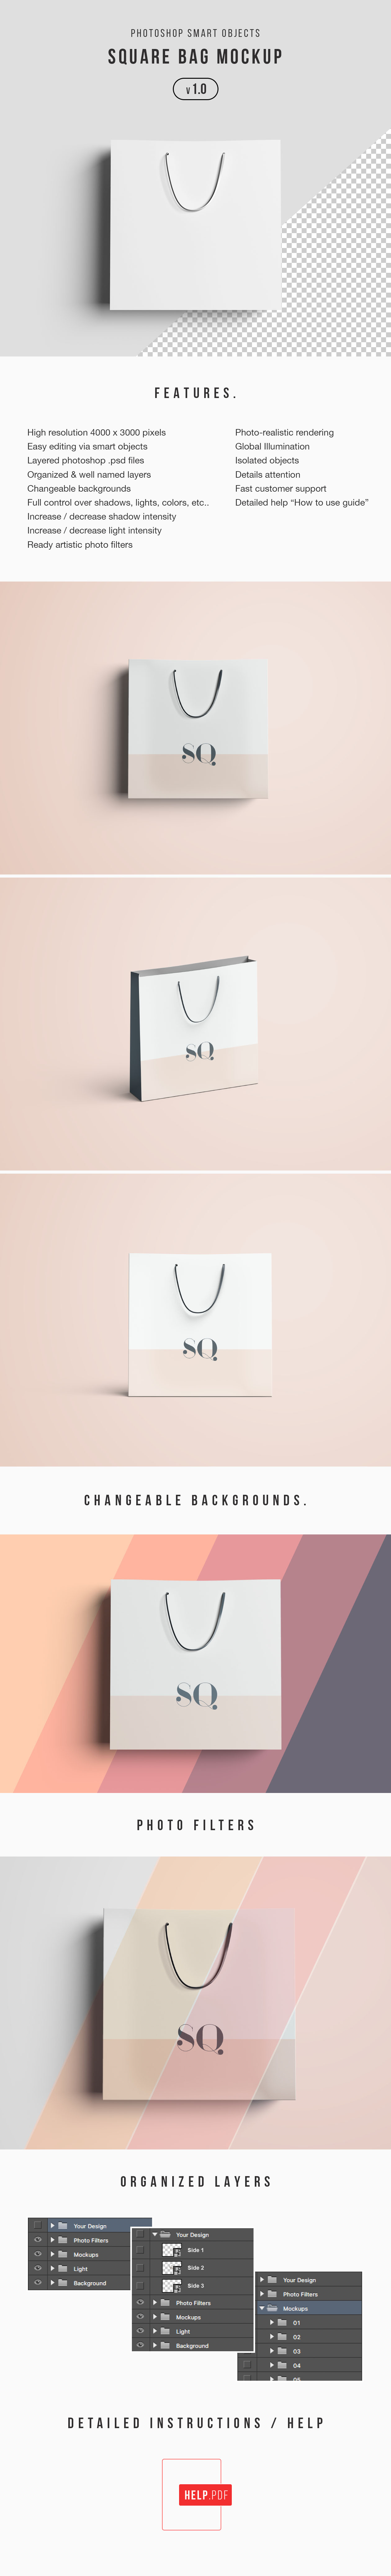 方形购物袋制作设计图样机模板 Square Bag Mockup插图